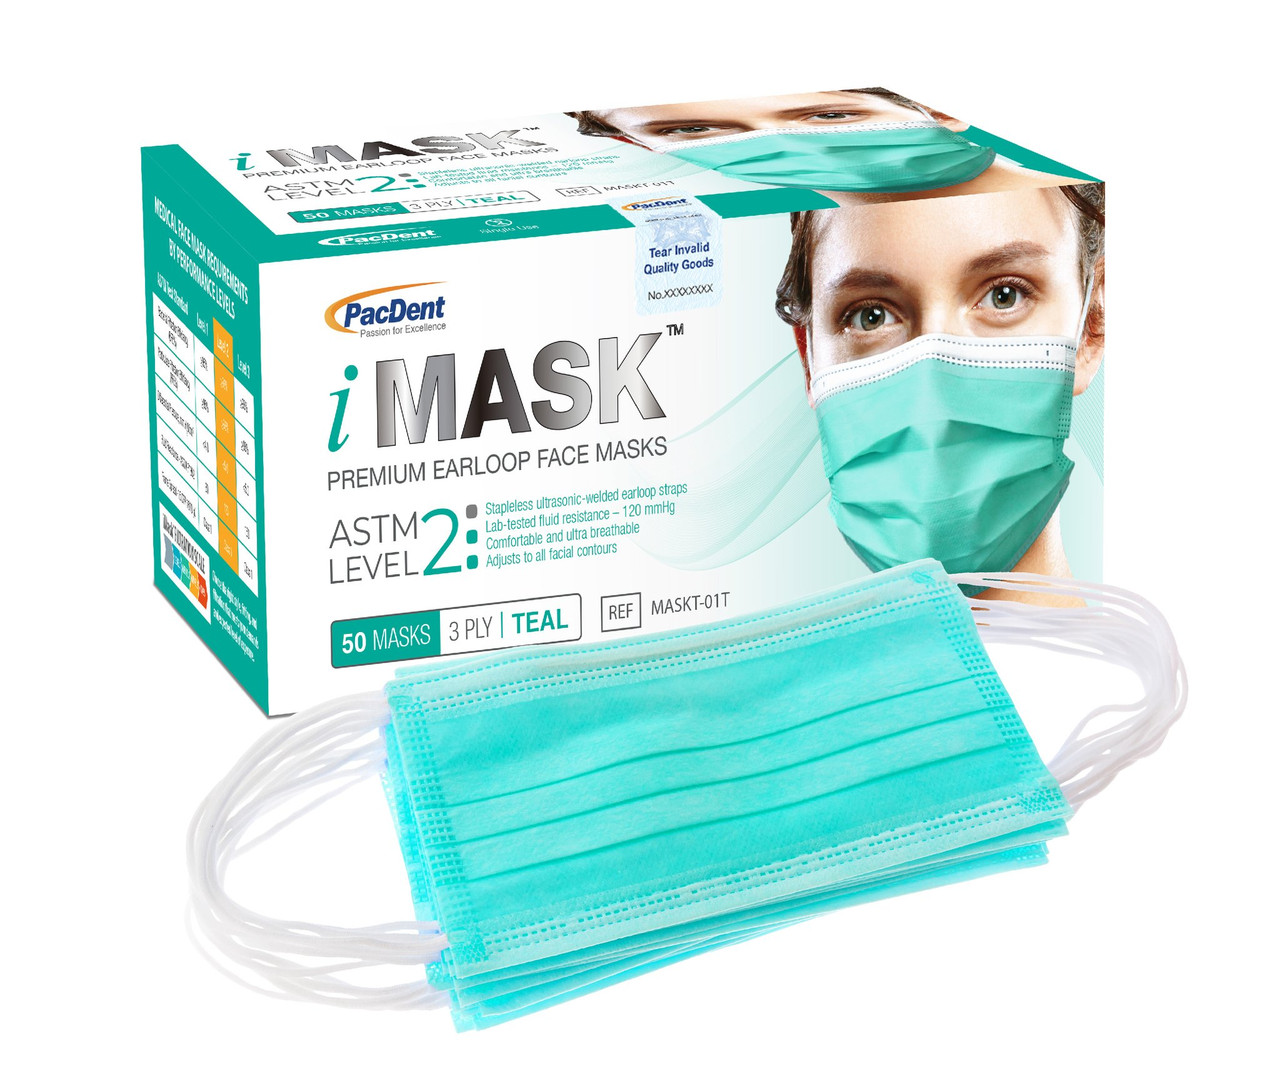 Pac-Dent iMask Premium Ear-loop Face Masks ASTM Level 2, Teal, 50/bx